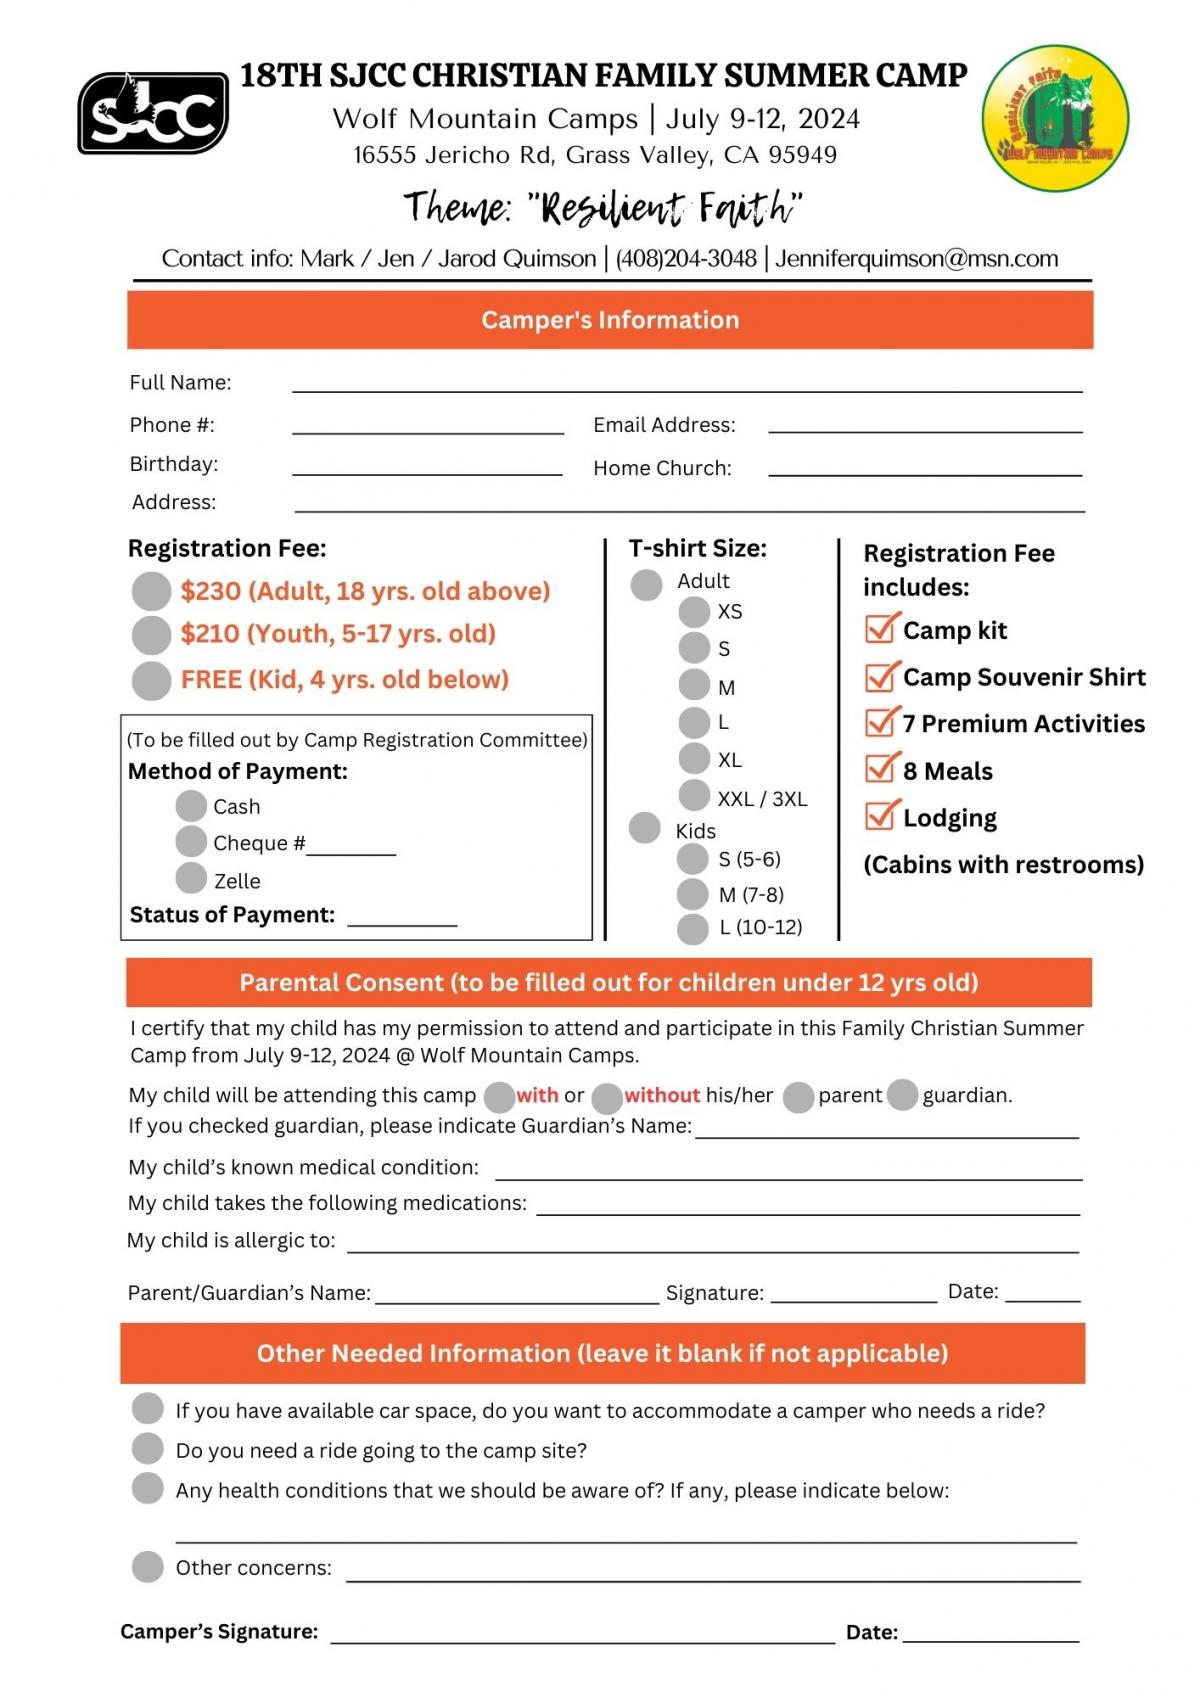 SJCC Camp Registration Form_FINAL_non-sjcc.jpg